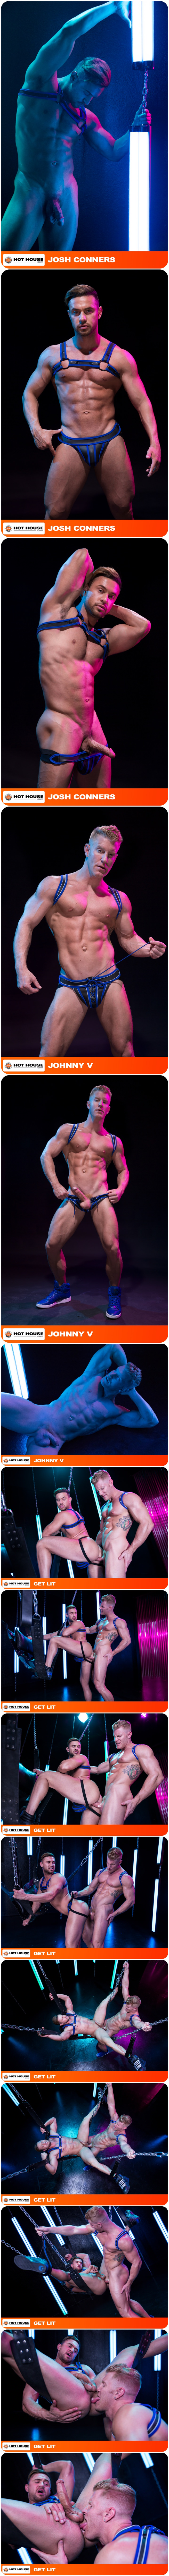 Hot House, Johnny V, Josh Conners